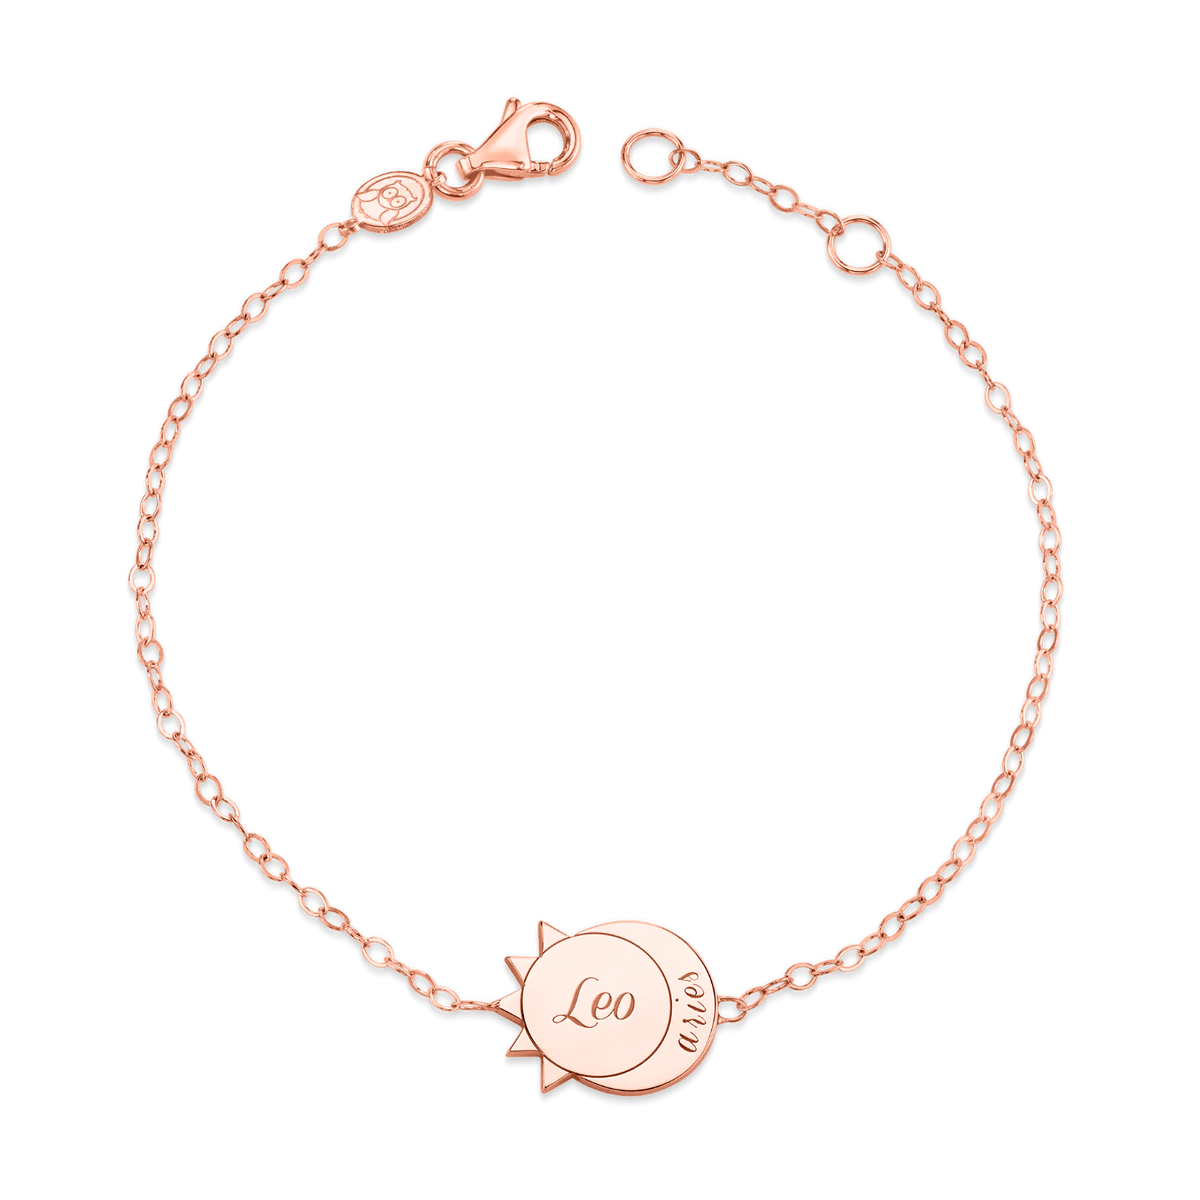 Children's Bracelet - Girls Size - Moonrise Jewelry